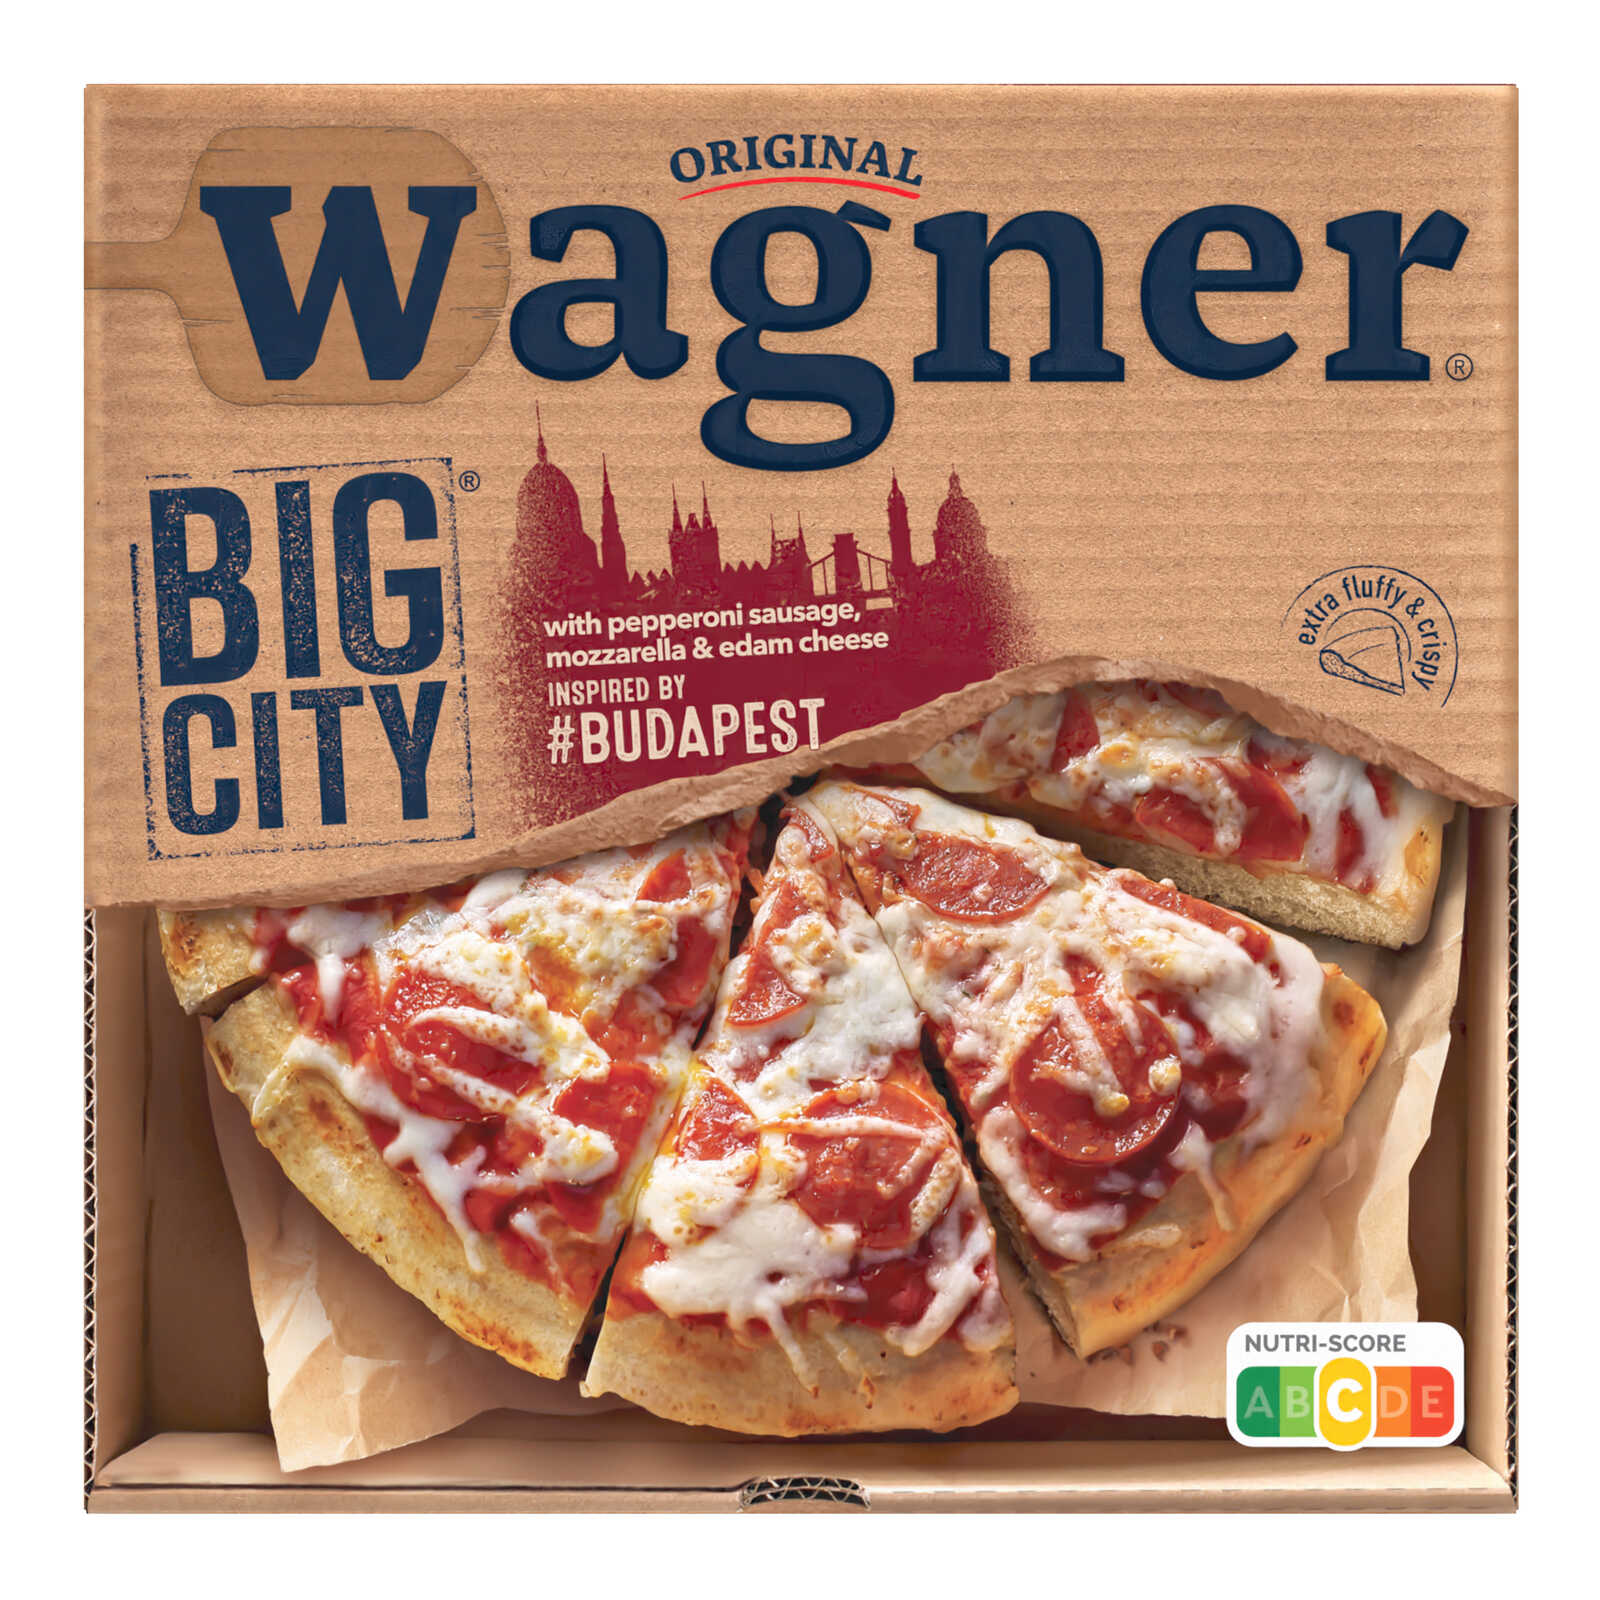 Wagner-Big City Pizza